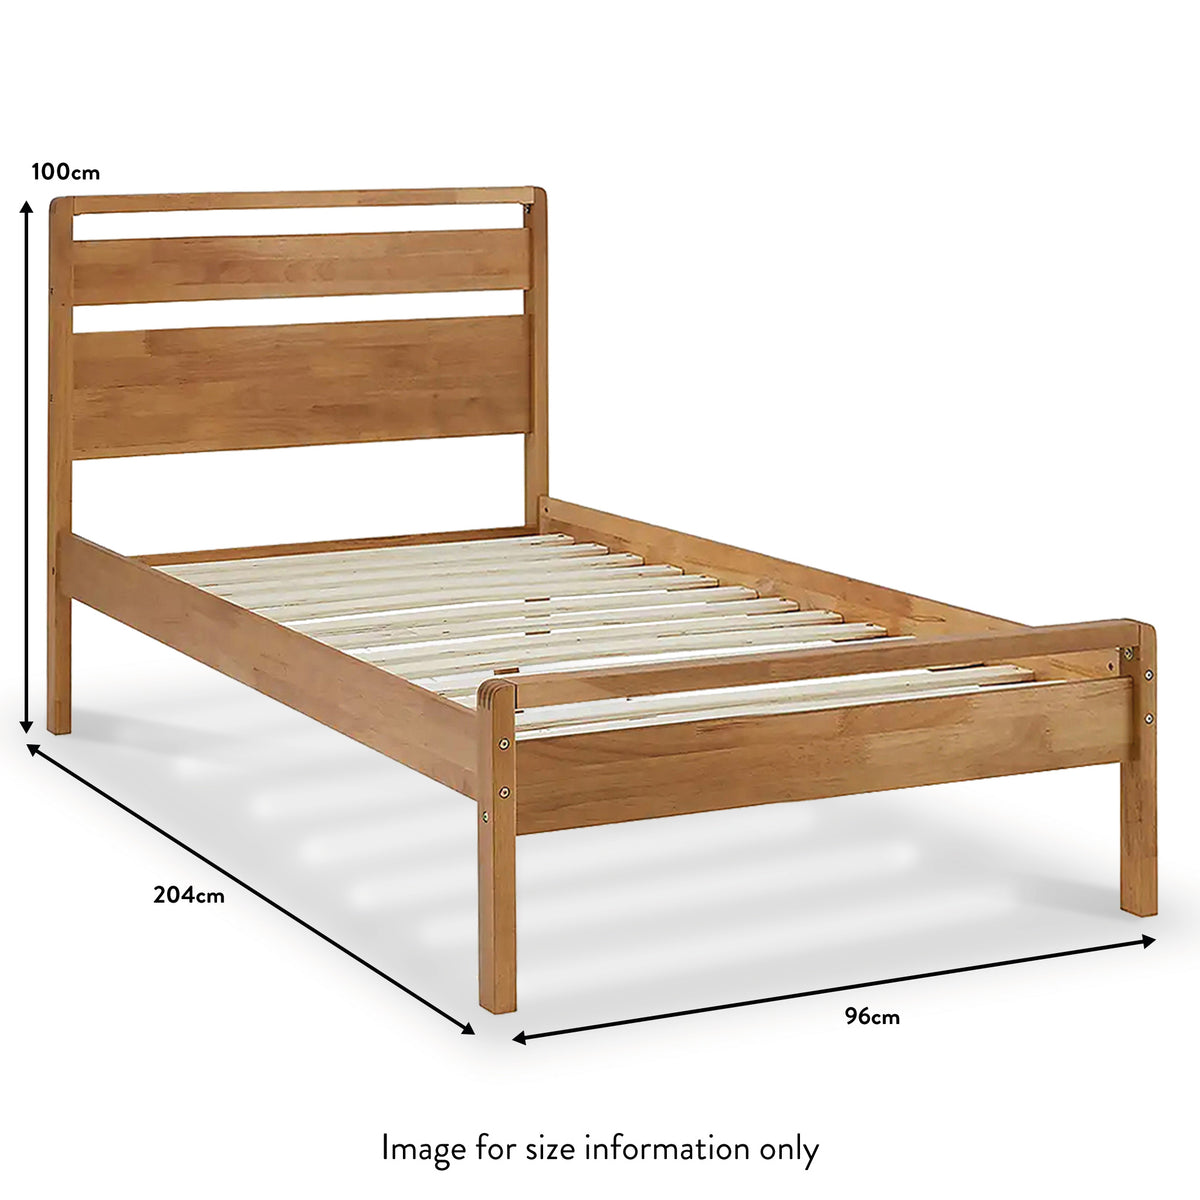 Maxi Oak Bed Single Frame dimensions